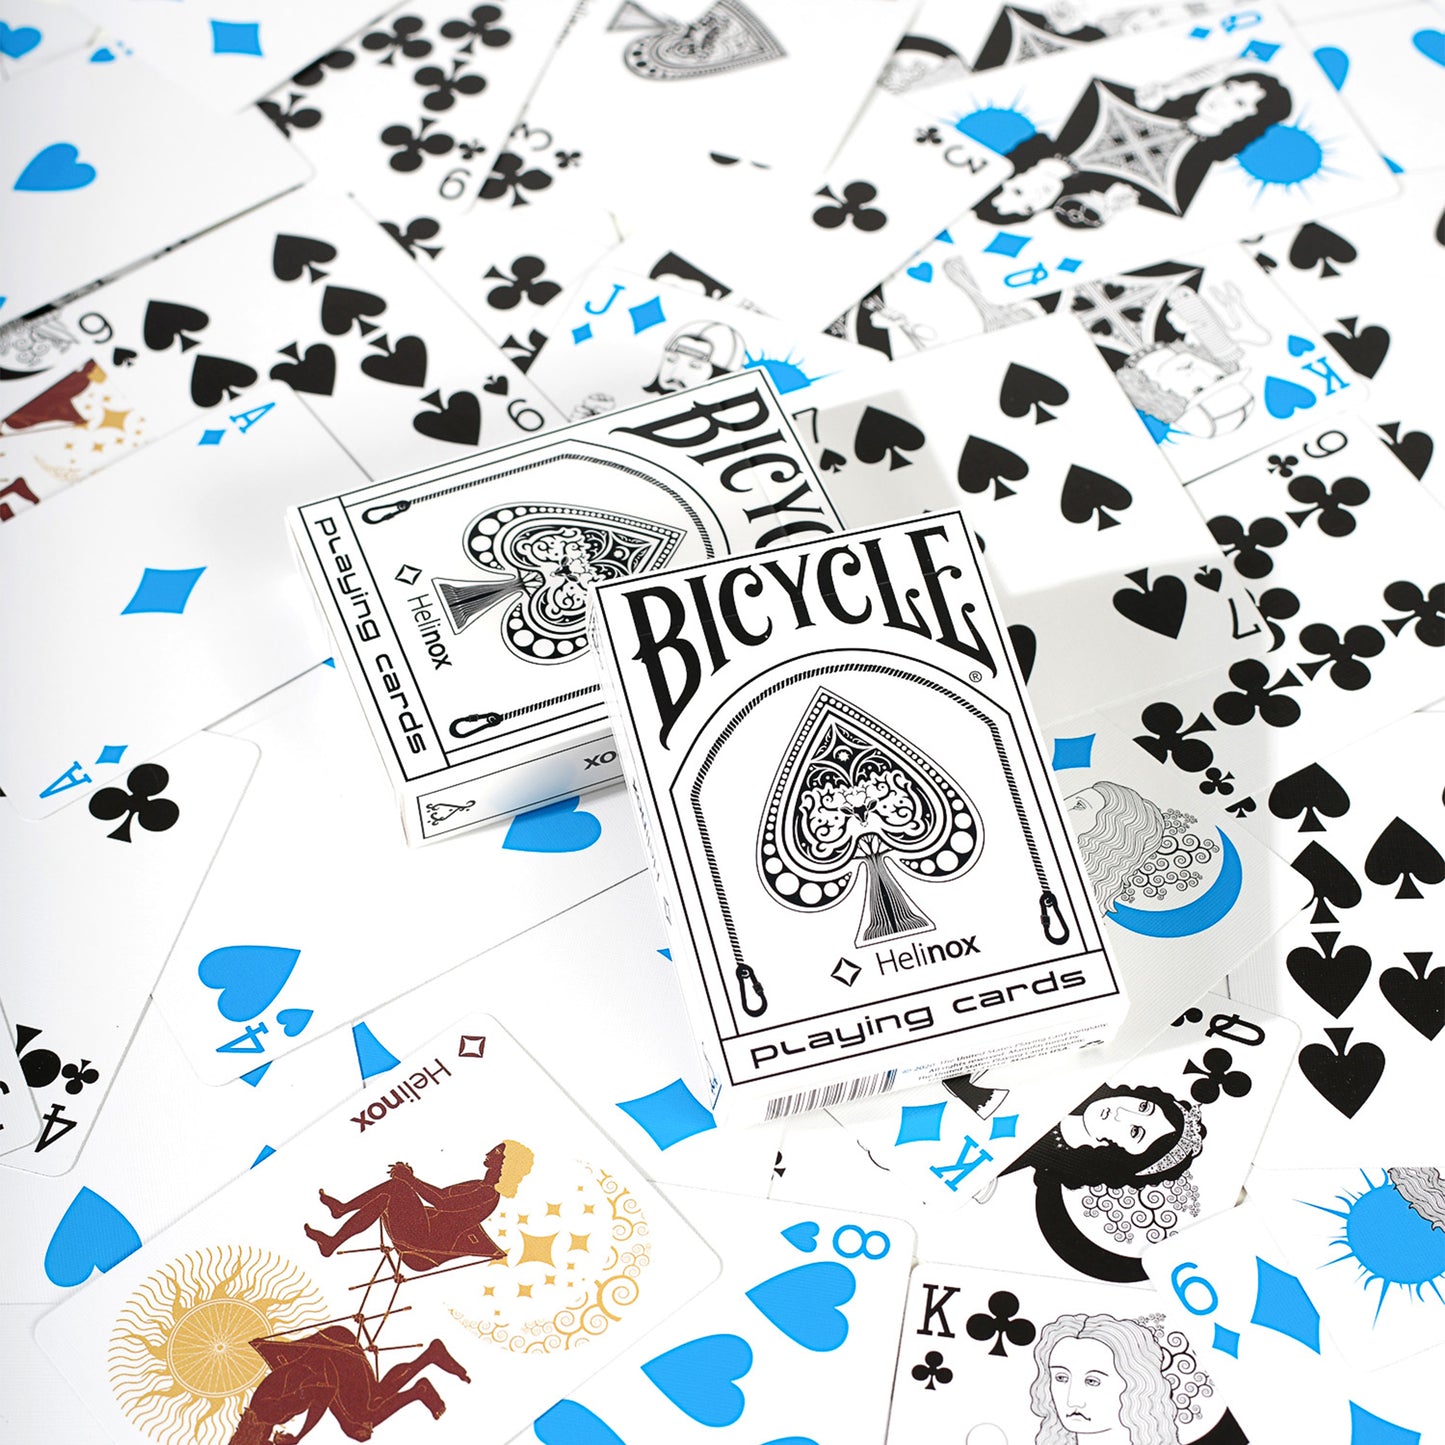 Helinox Bicycle Card - White